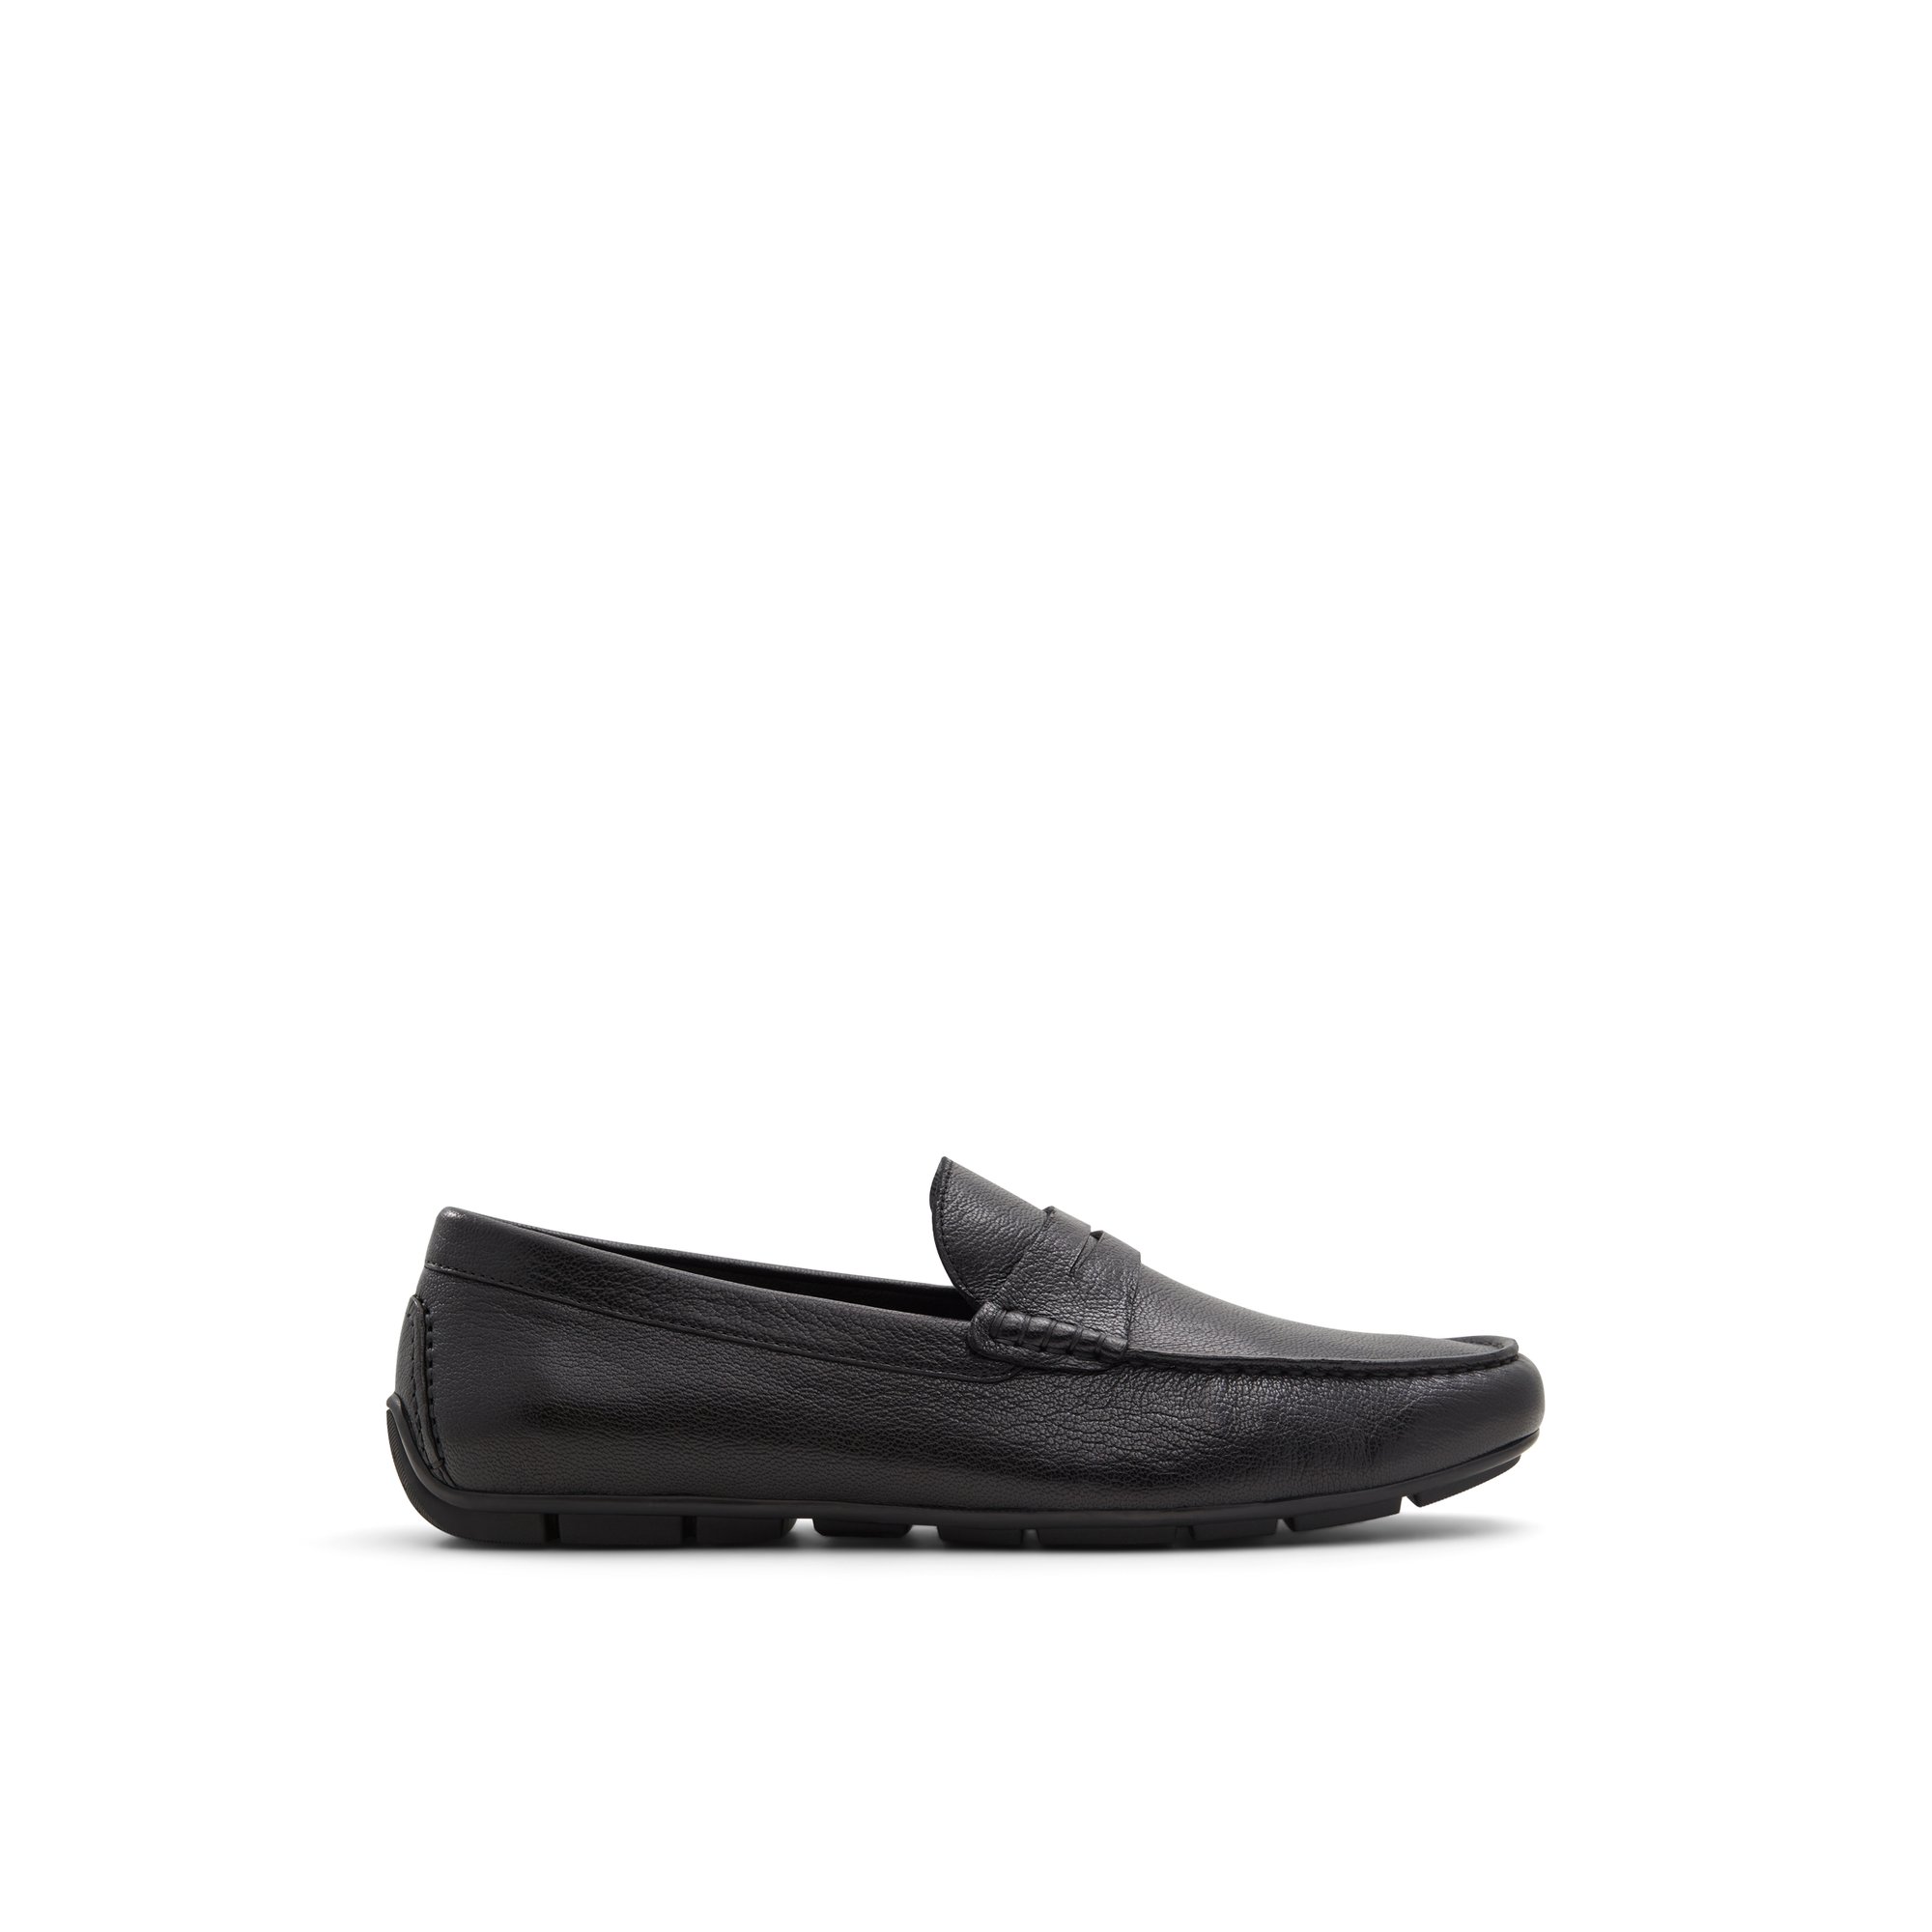 ALDO Discourse - Men's Casual Shoe - Black